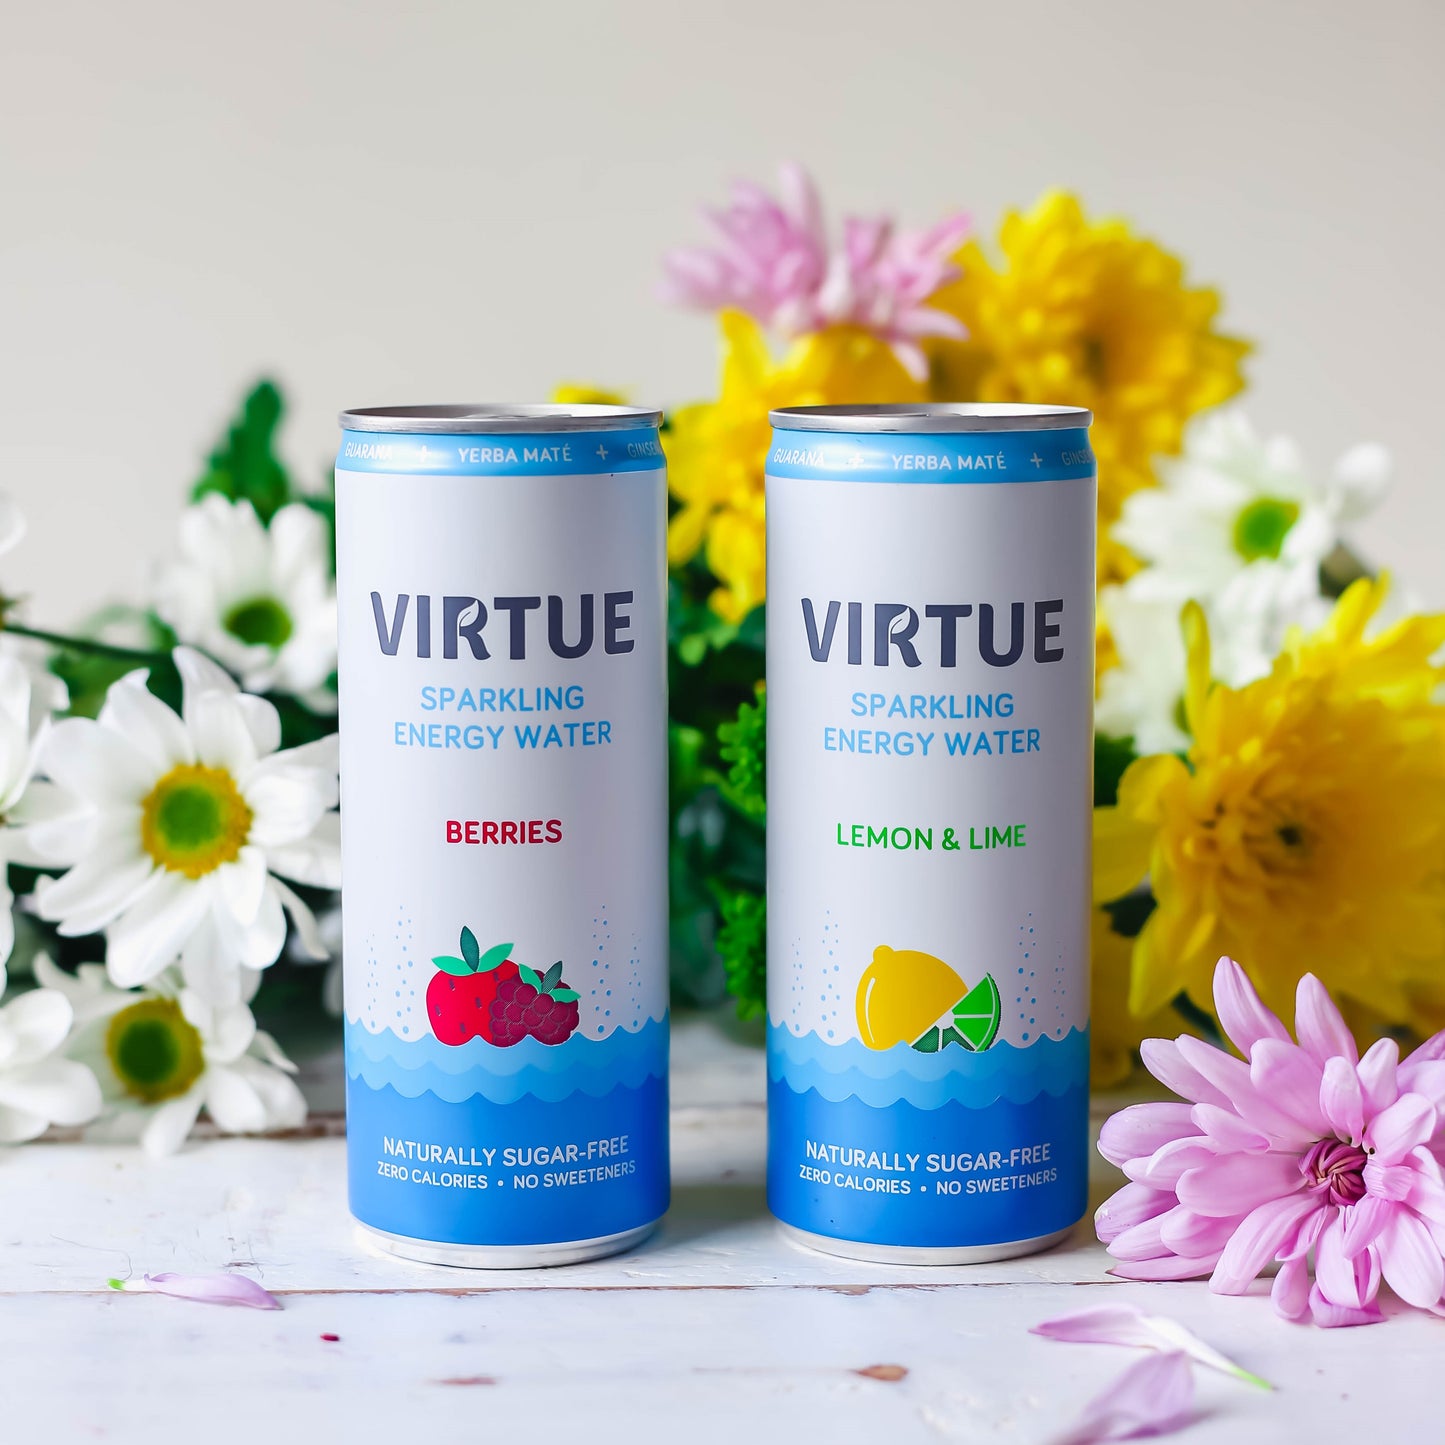 Virtue Energy Water Lemon & Lime